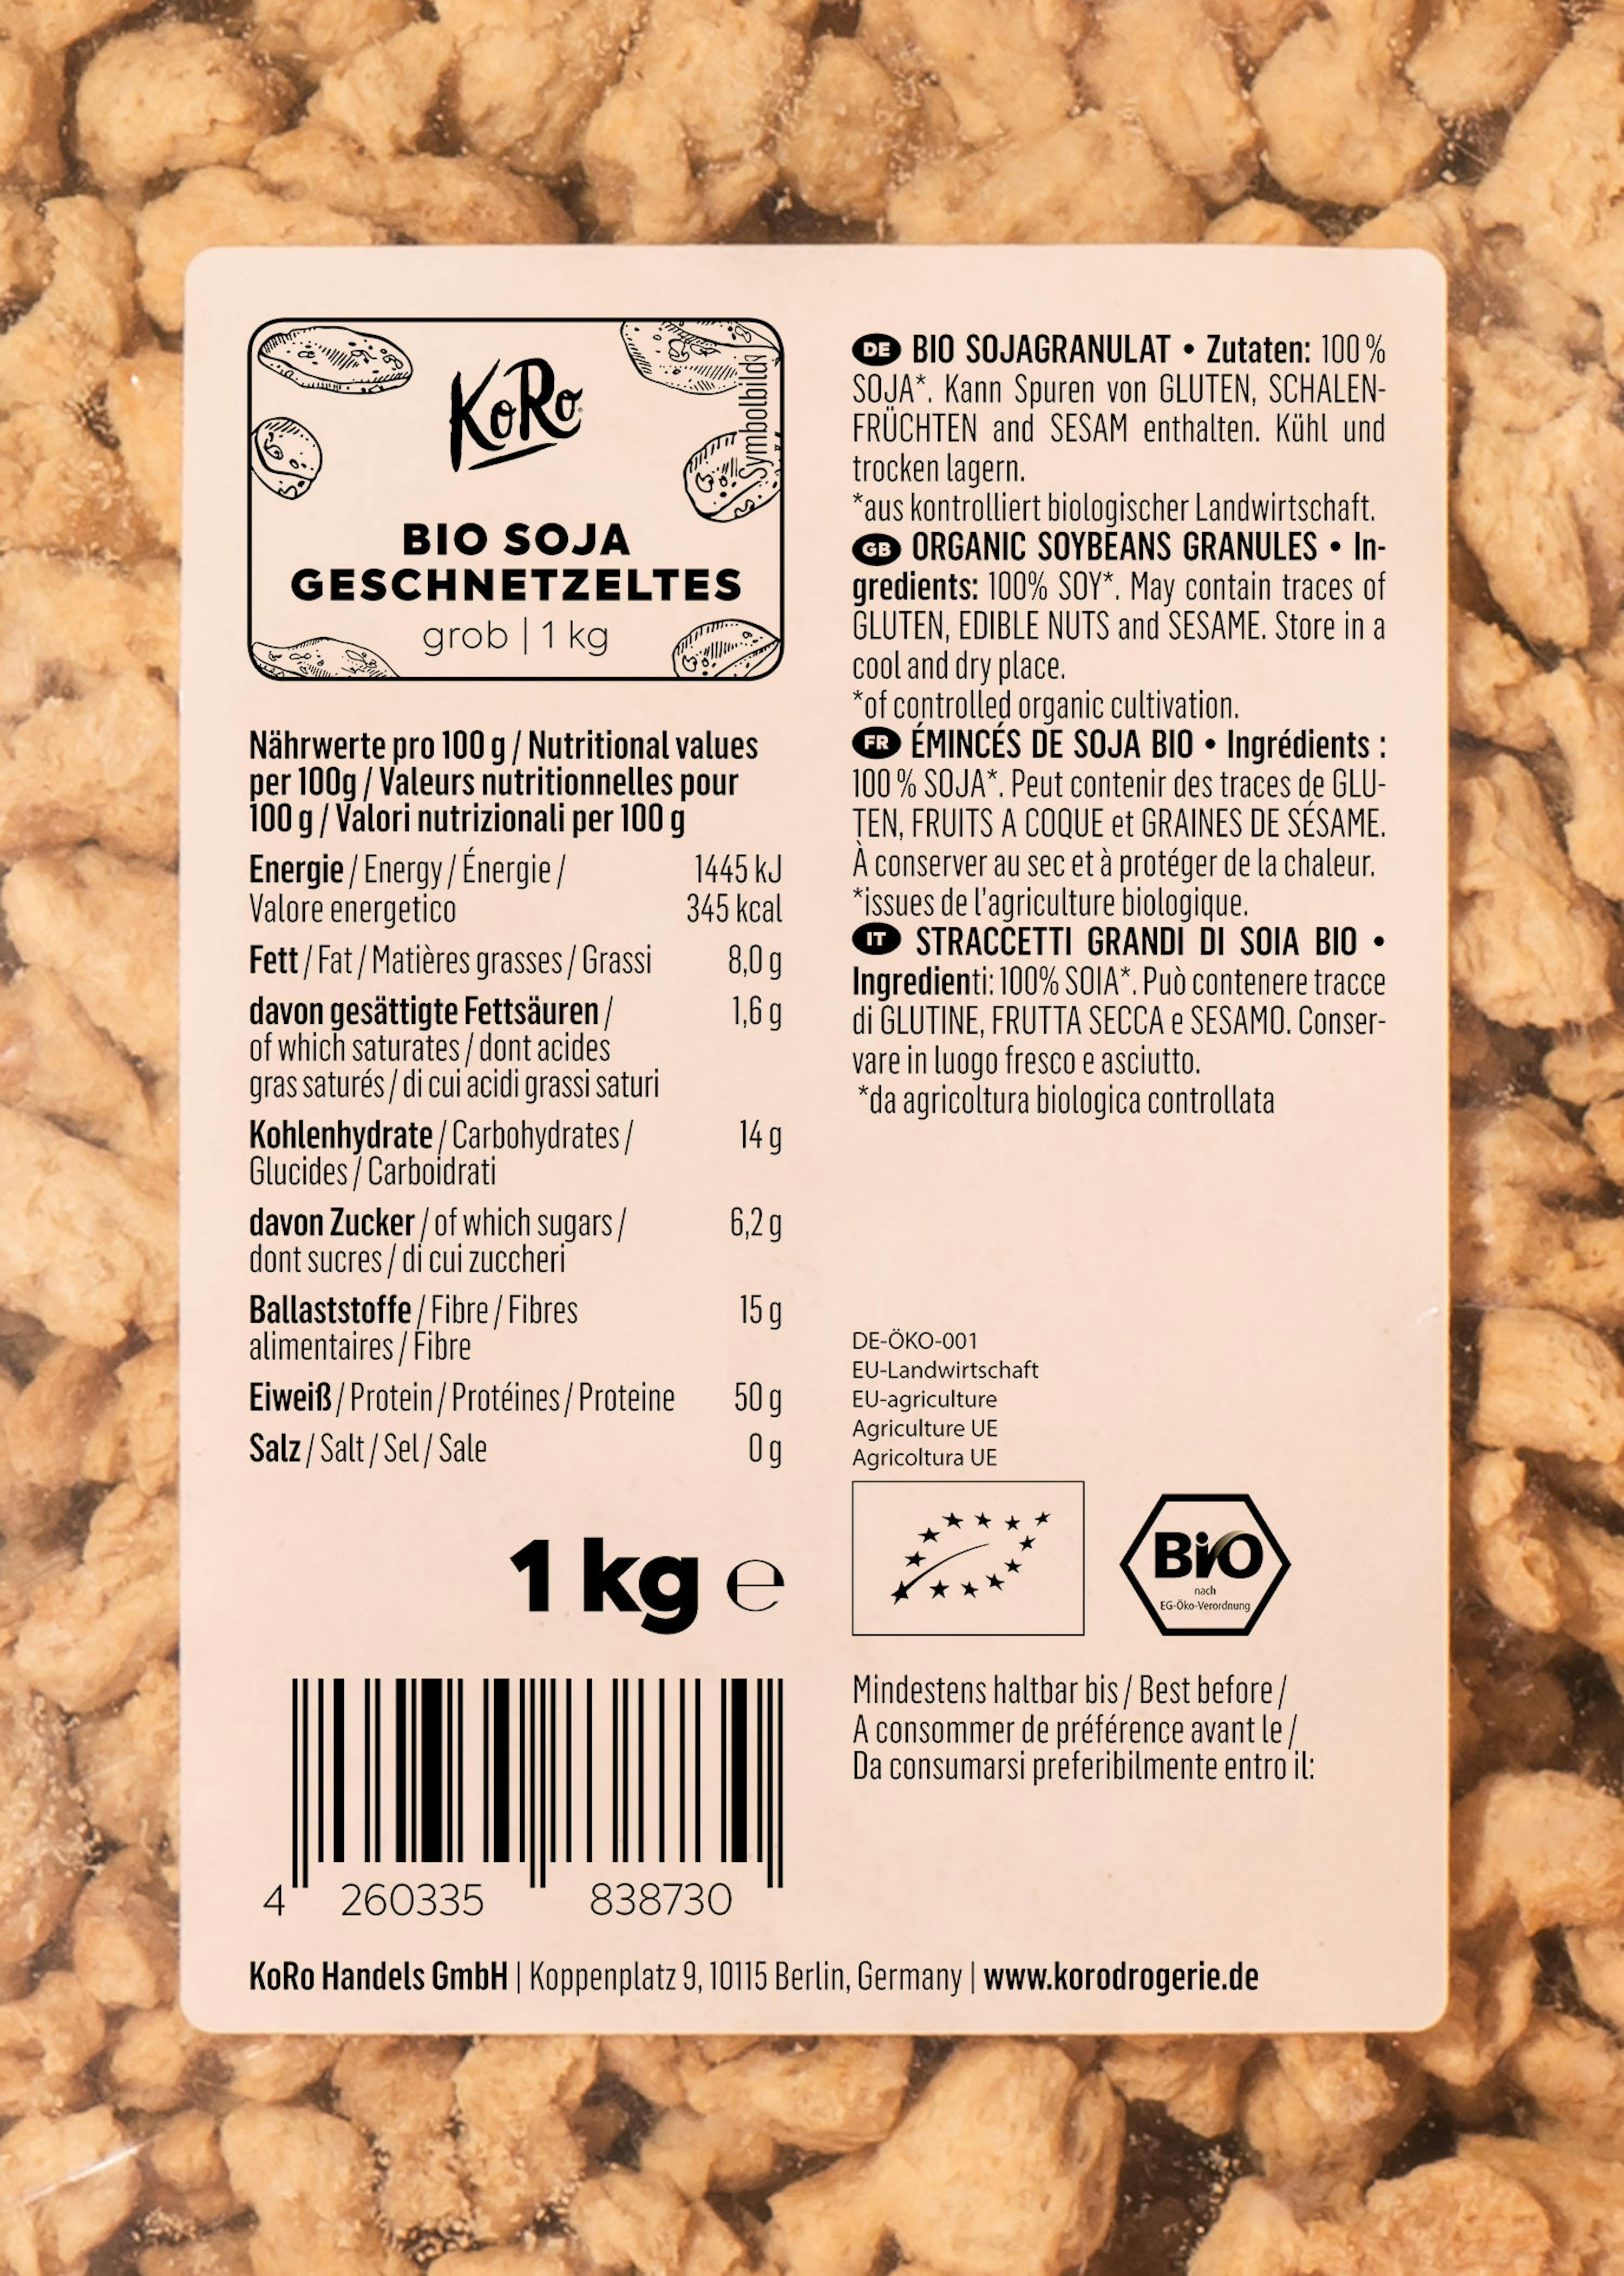 KoRo - Soja crispies (58%) au cacao 1 kg : : Epicerie